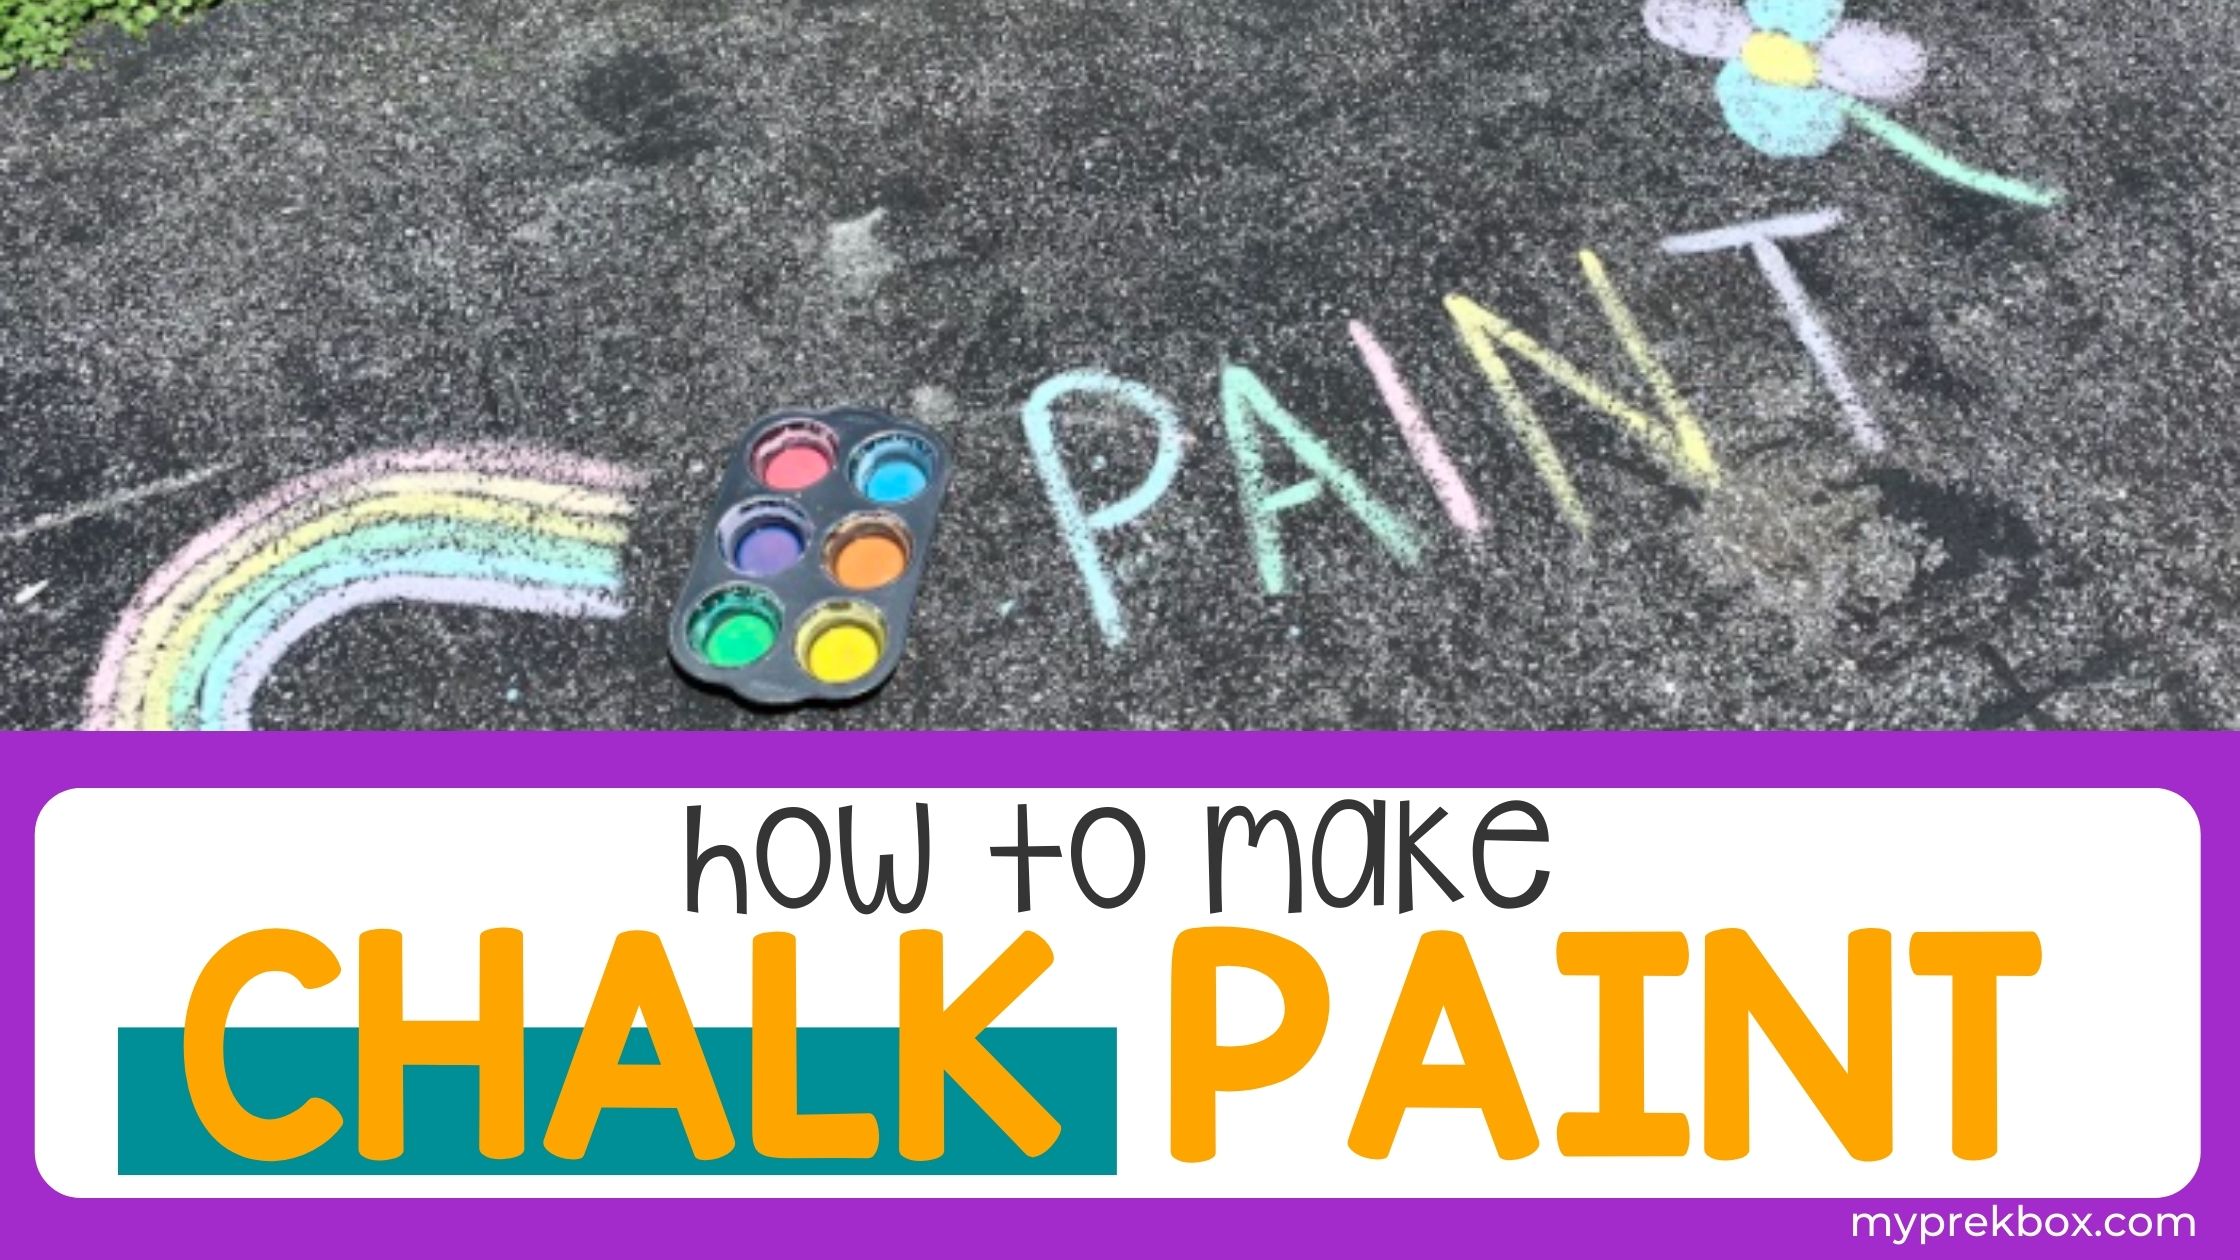 How to Make Sidewalk Chalk Paint